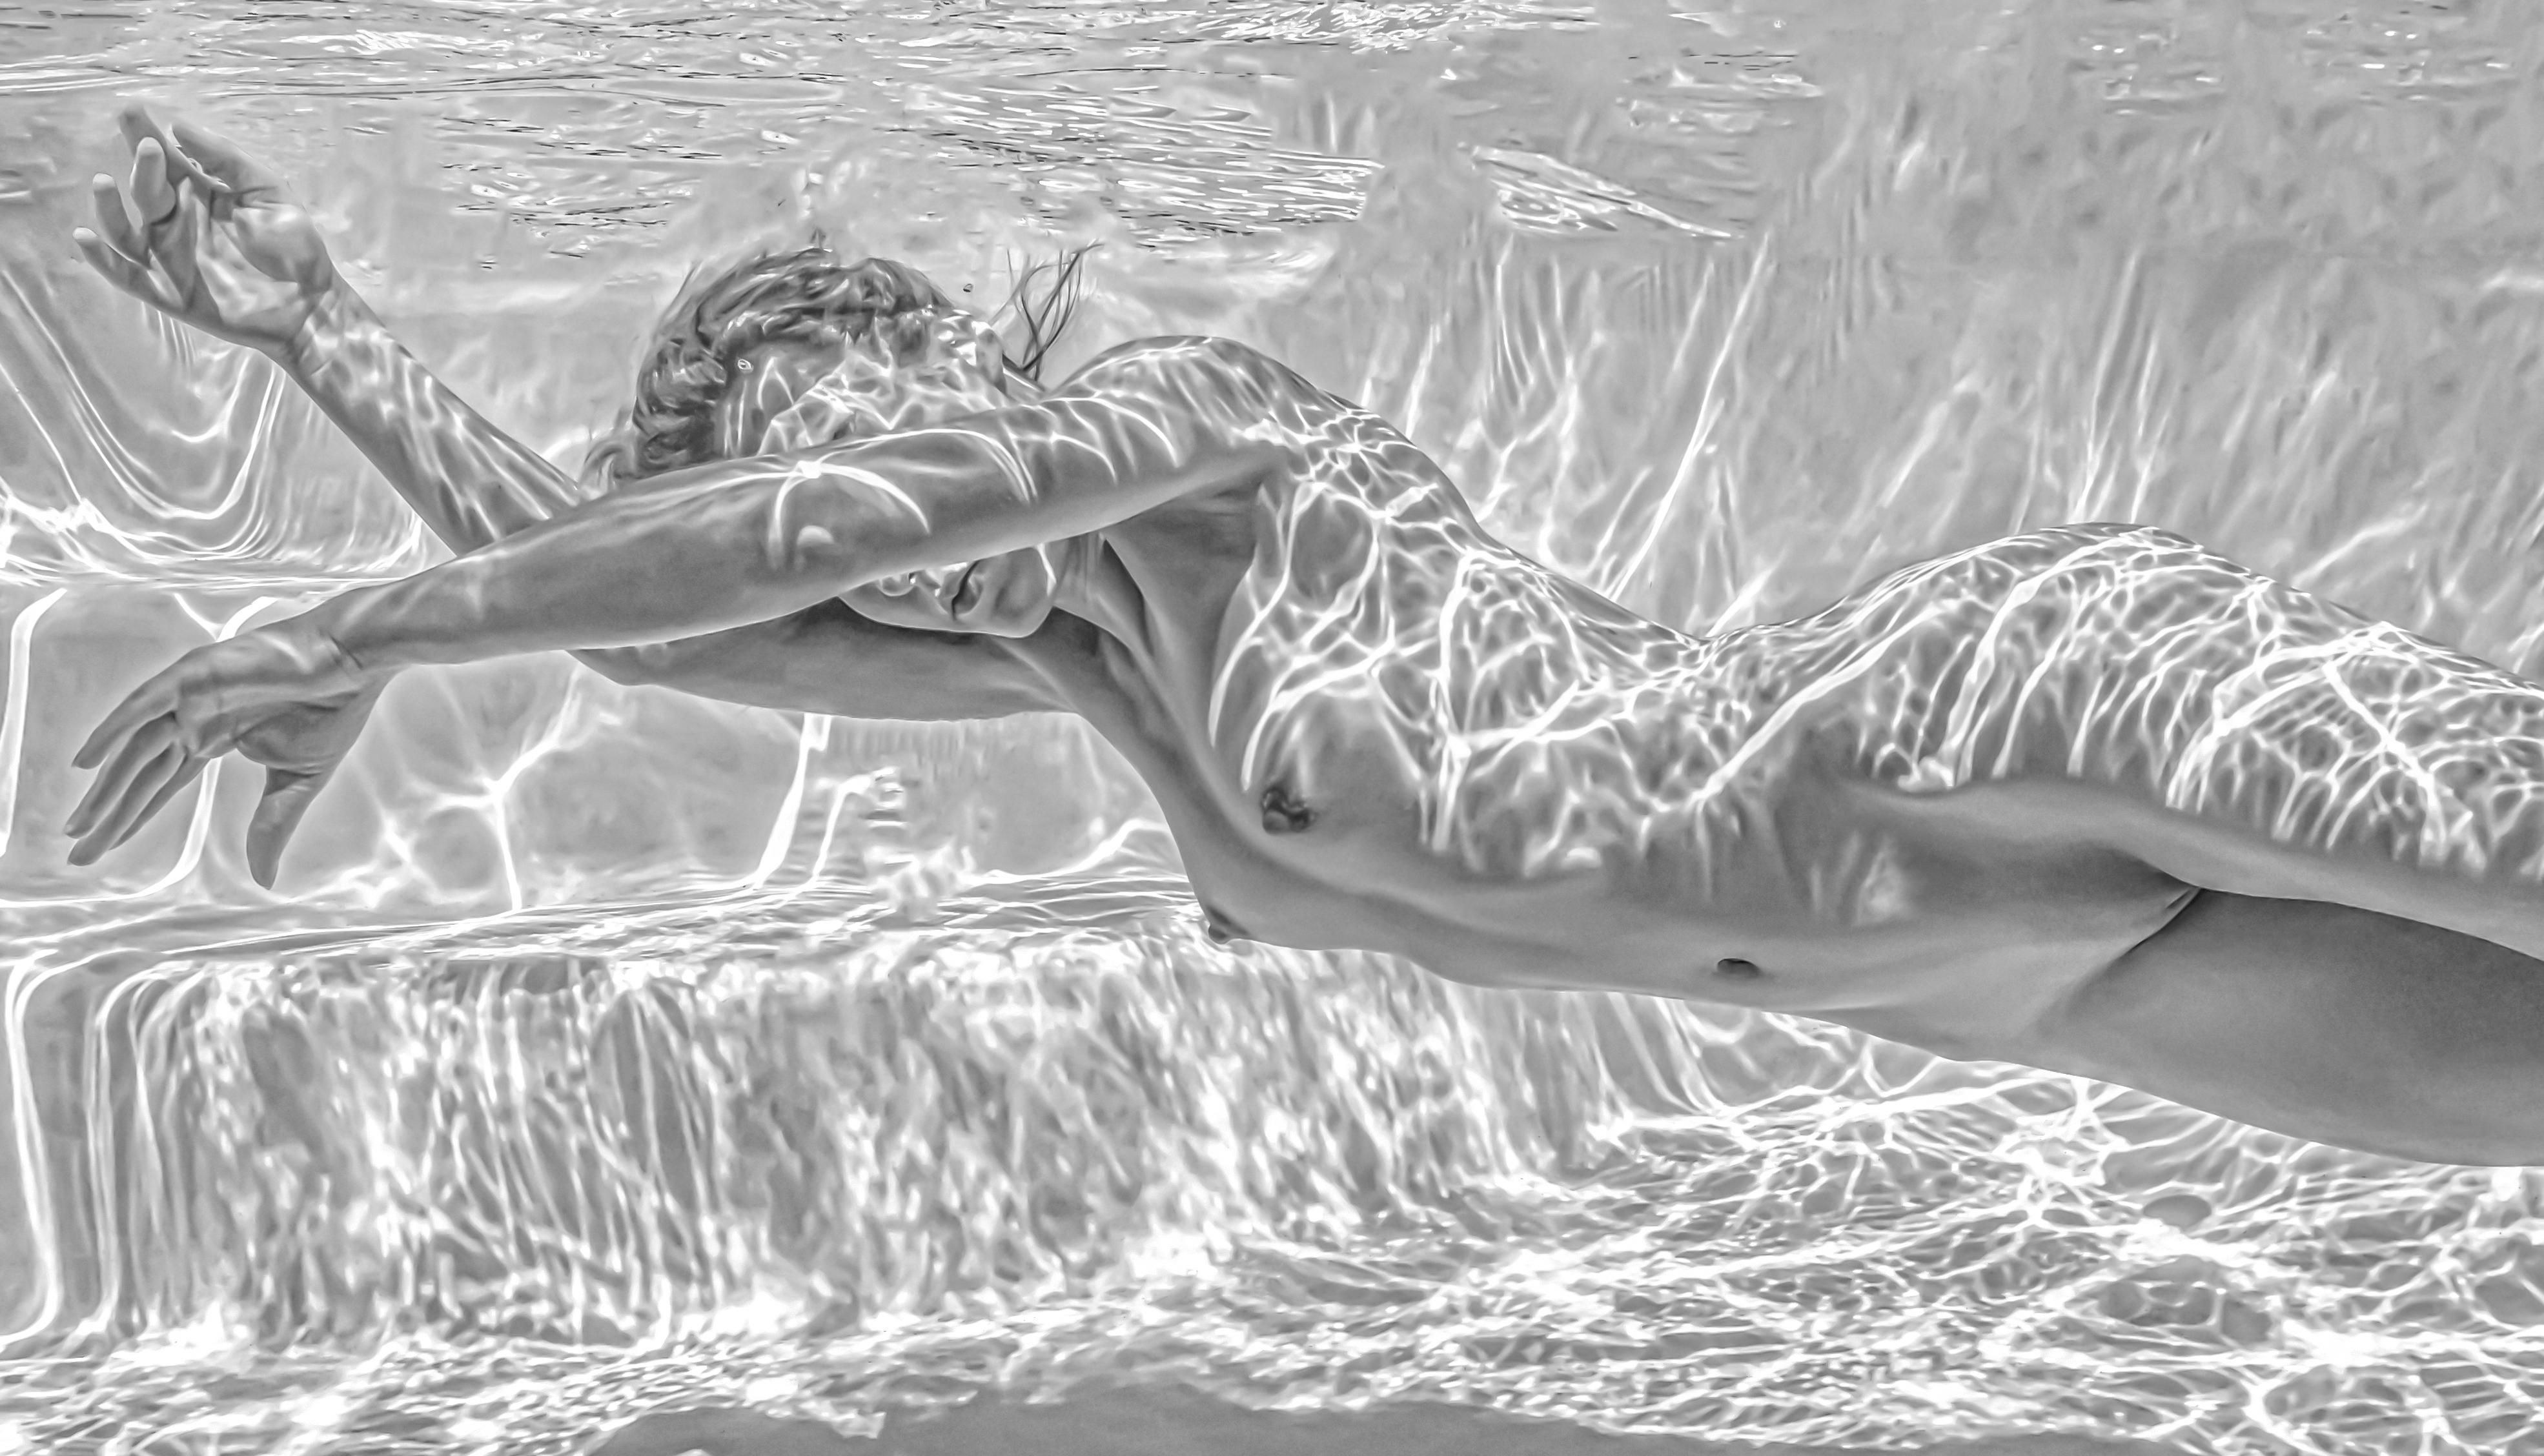 Thunderweb - underwater black & white nude photograph - print on paper 24